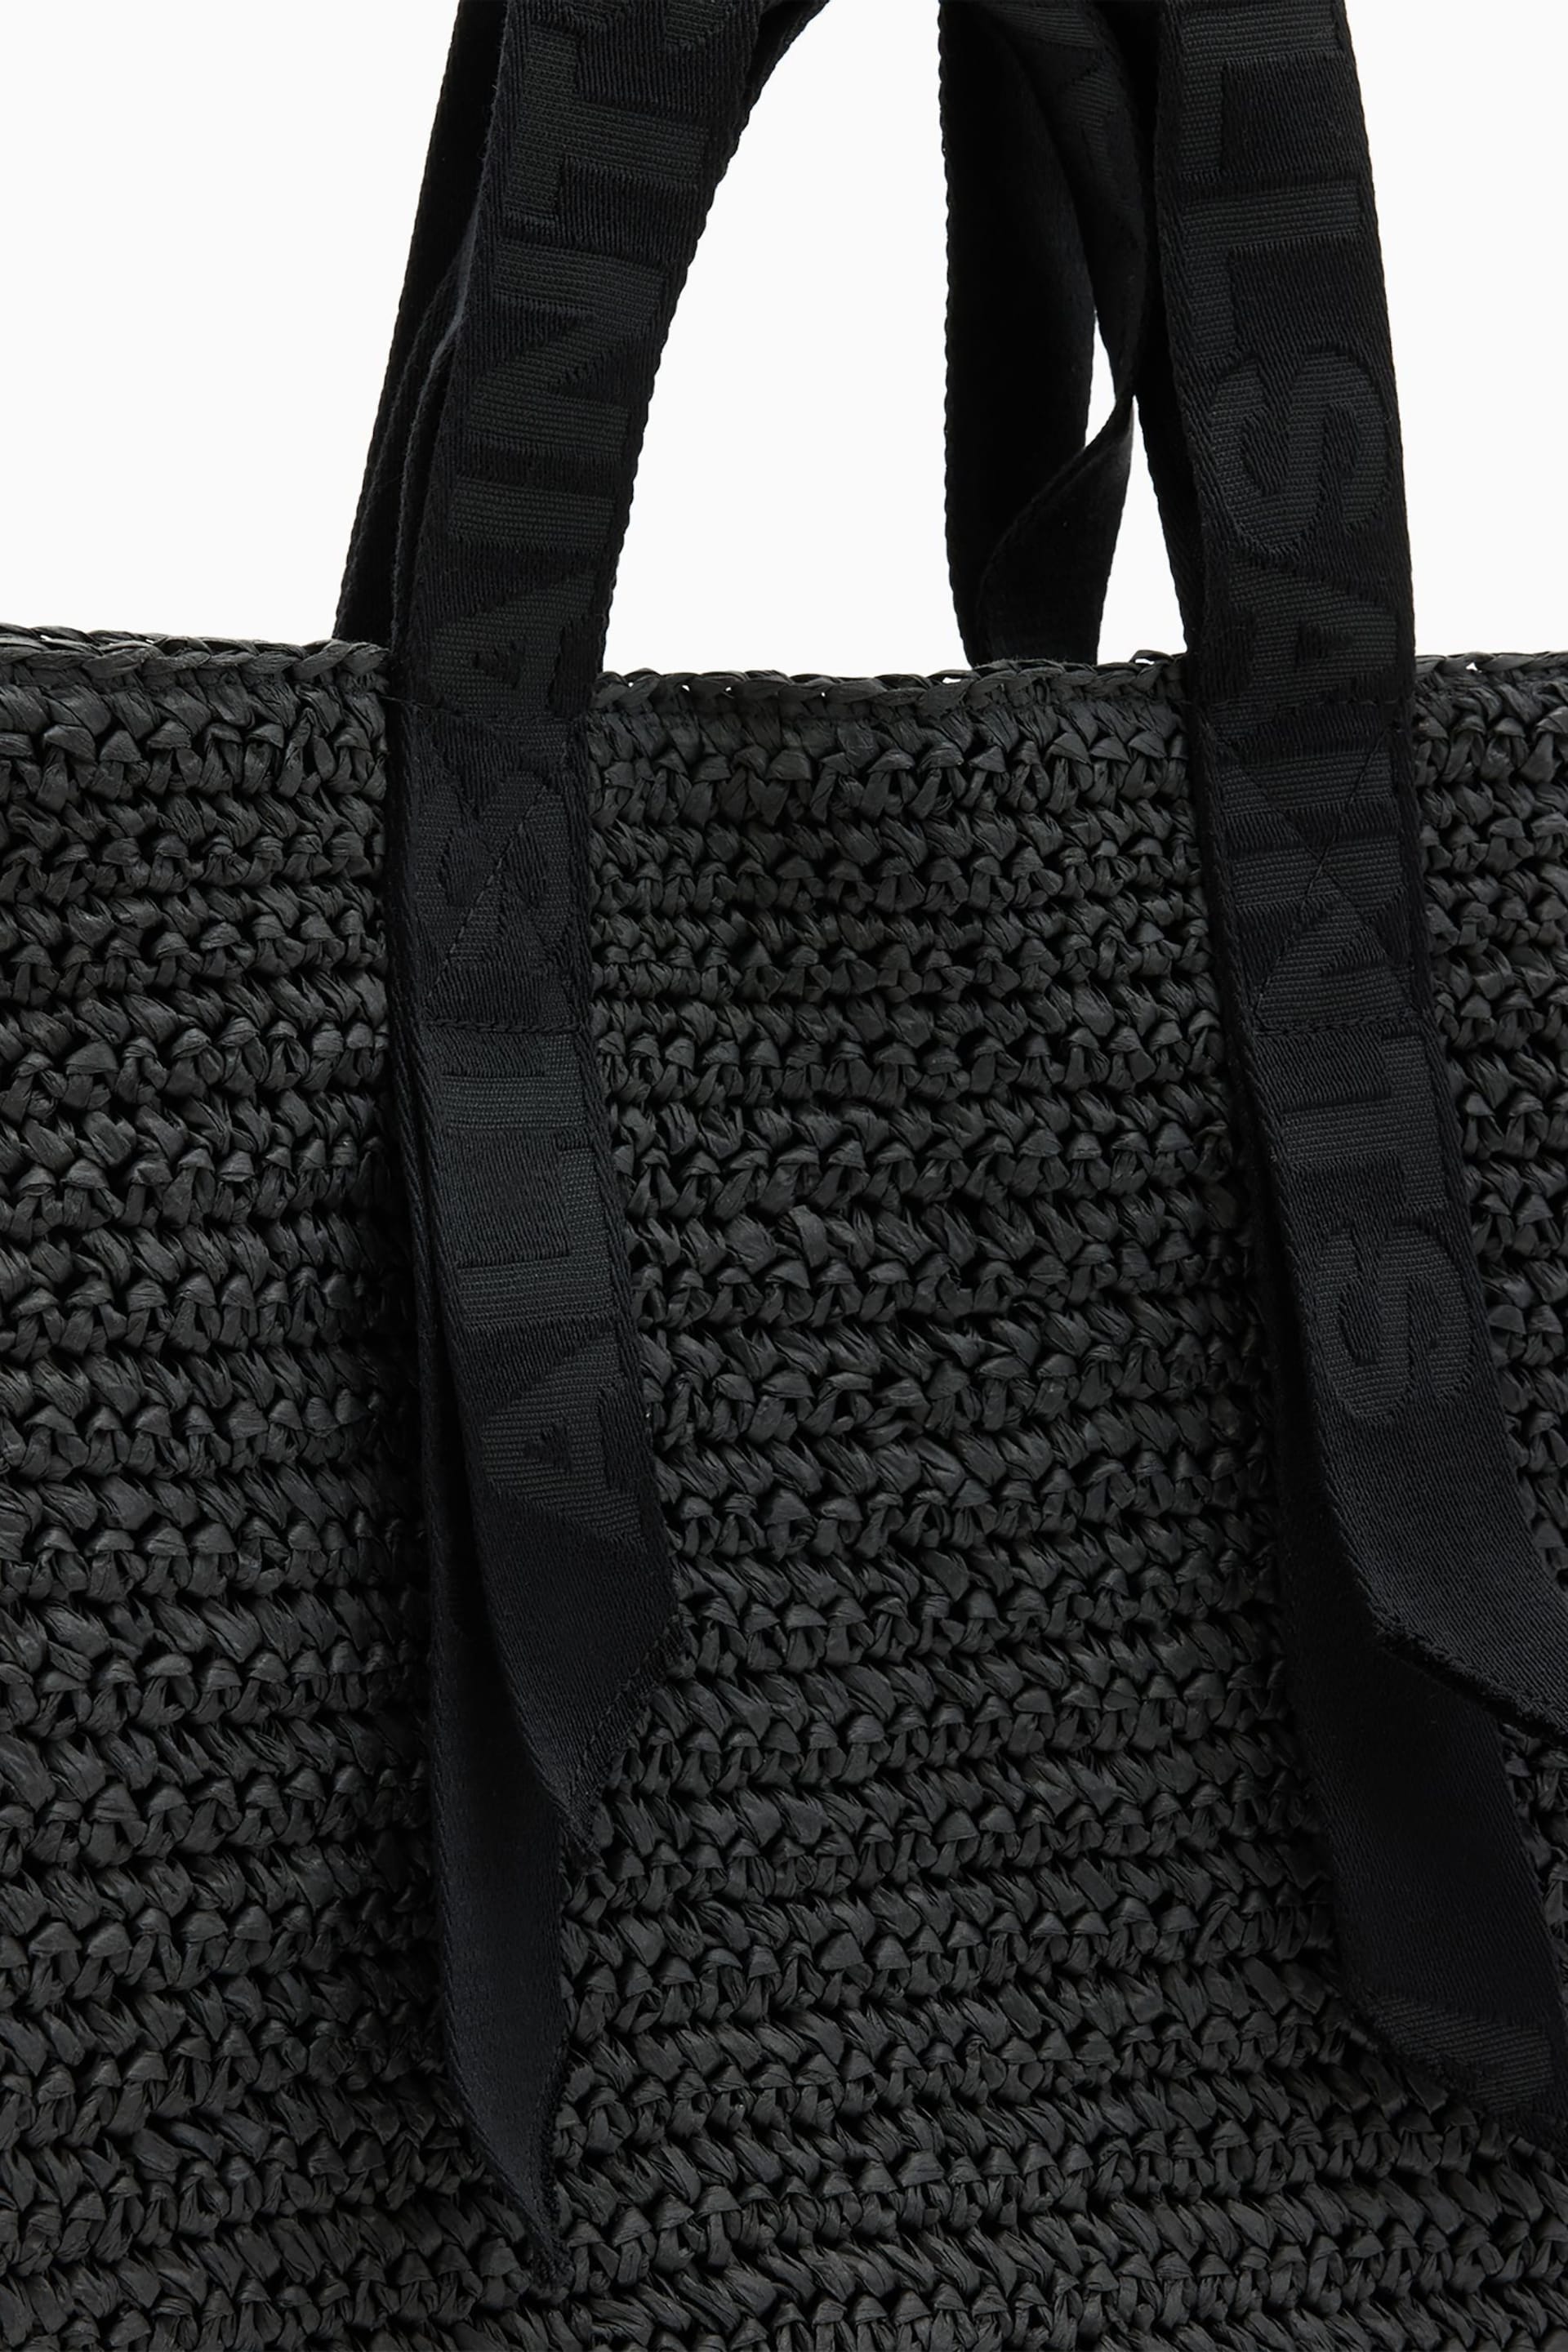 AllSaints Black Lullah N/S Tote Bag - Image 5 of 7